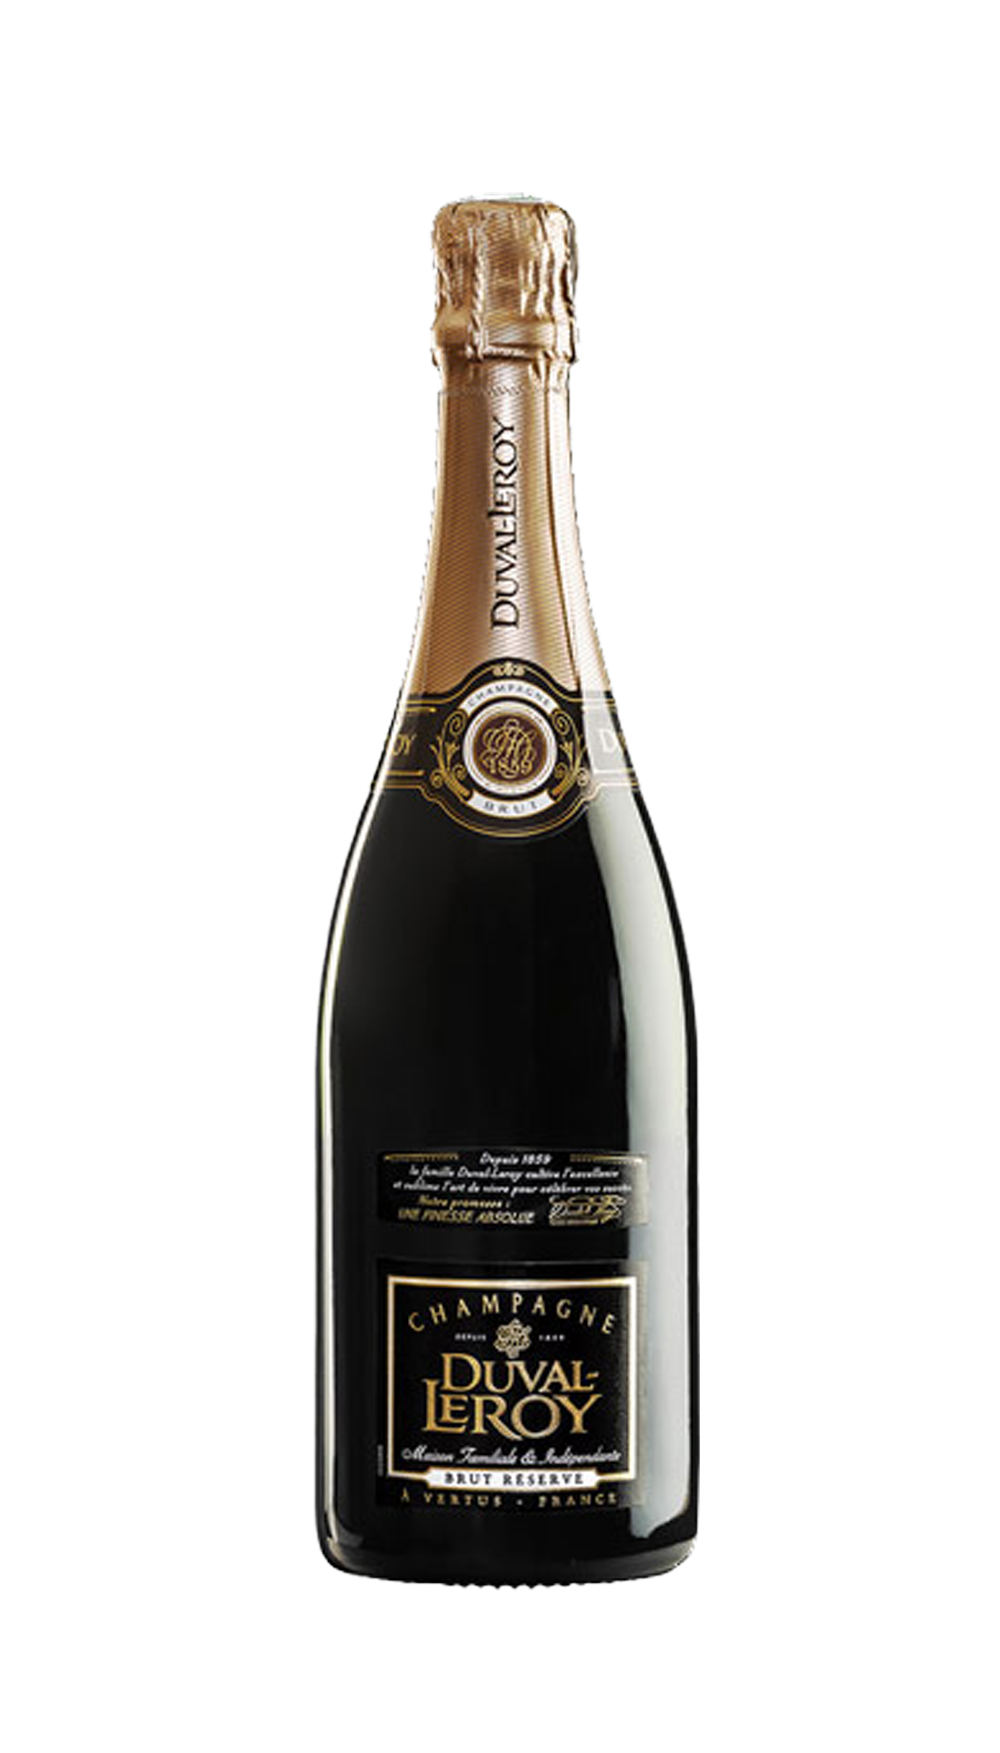 champagne duval leroy brut reserve